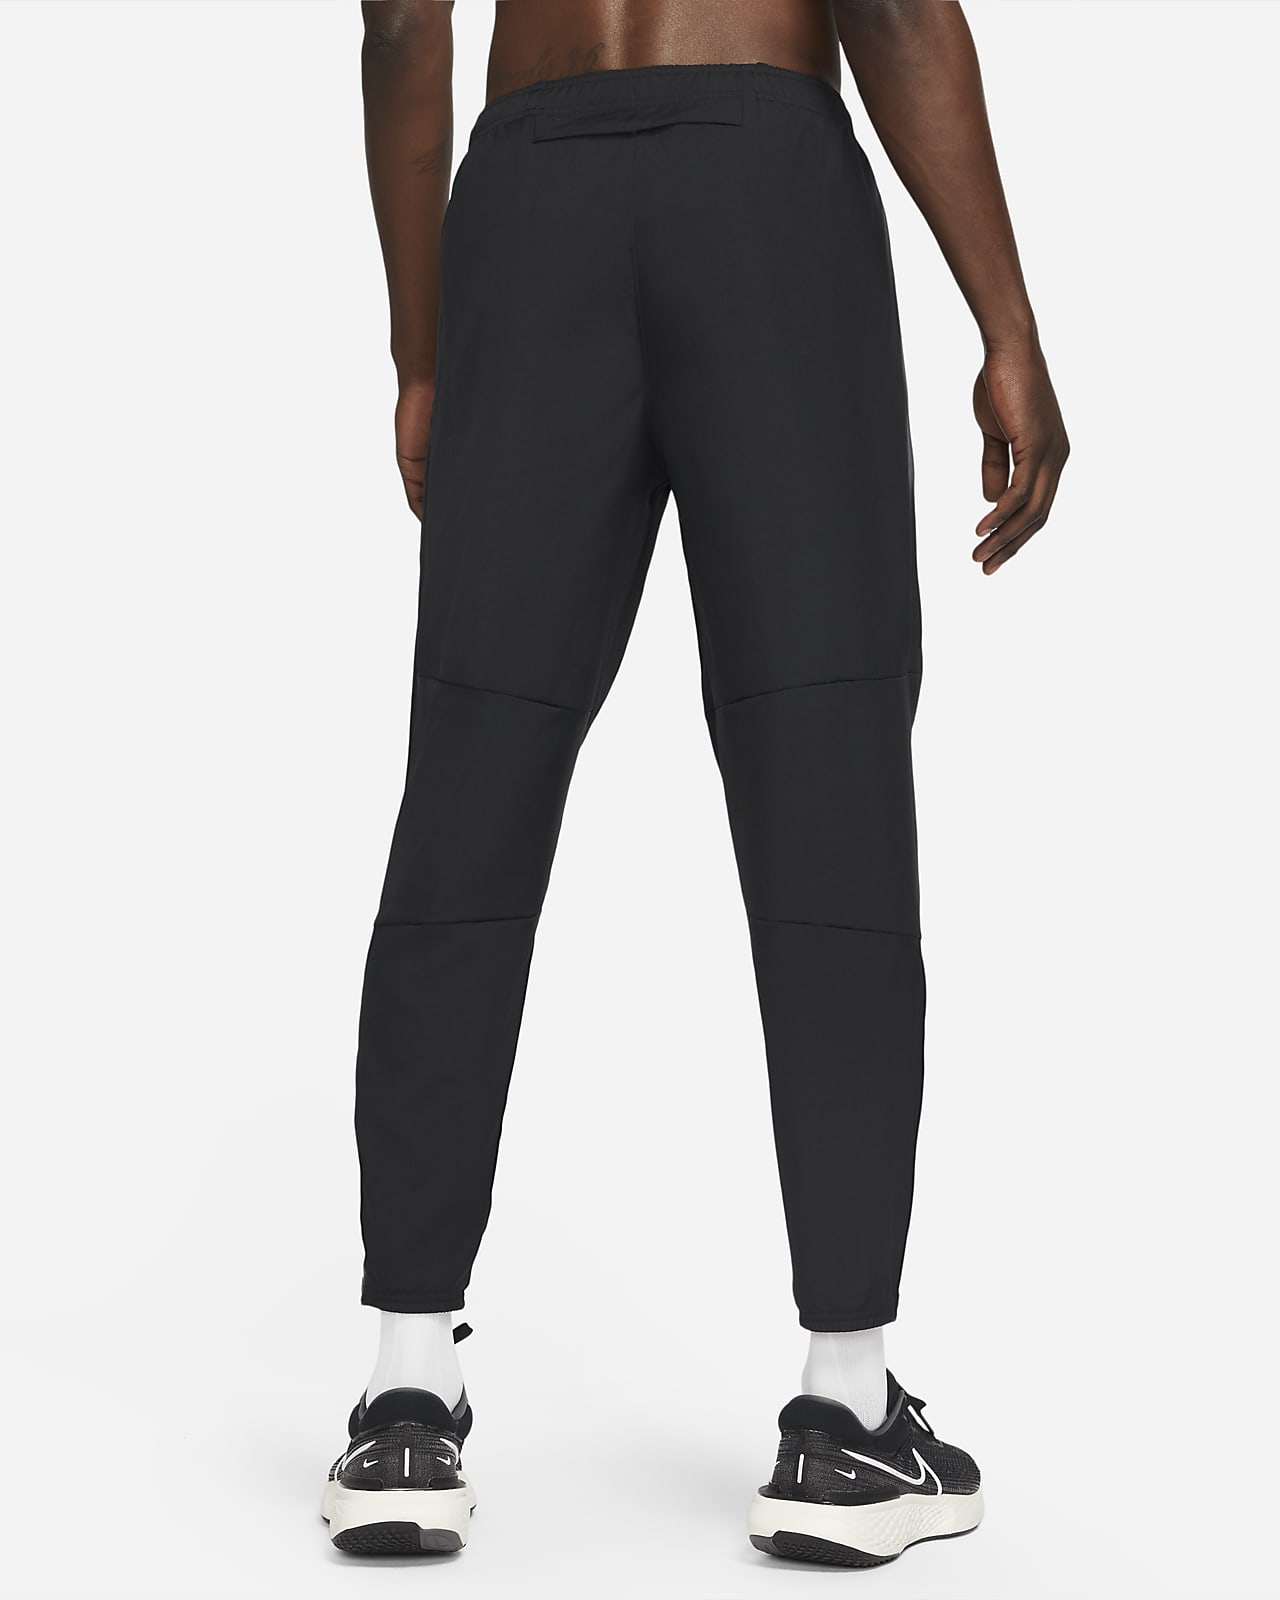 Nike pants for Men